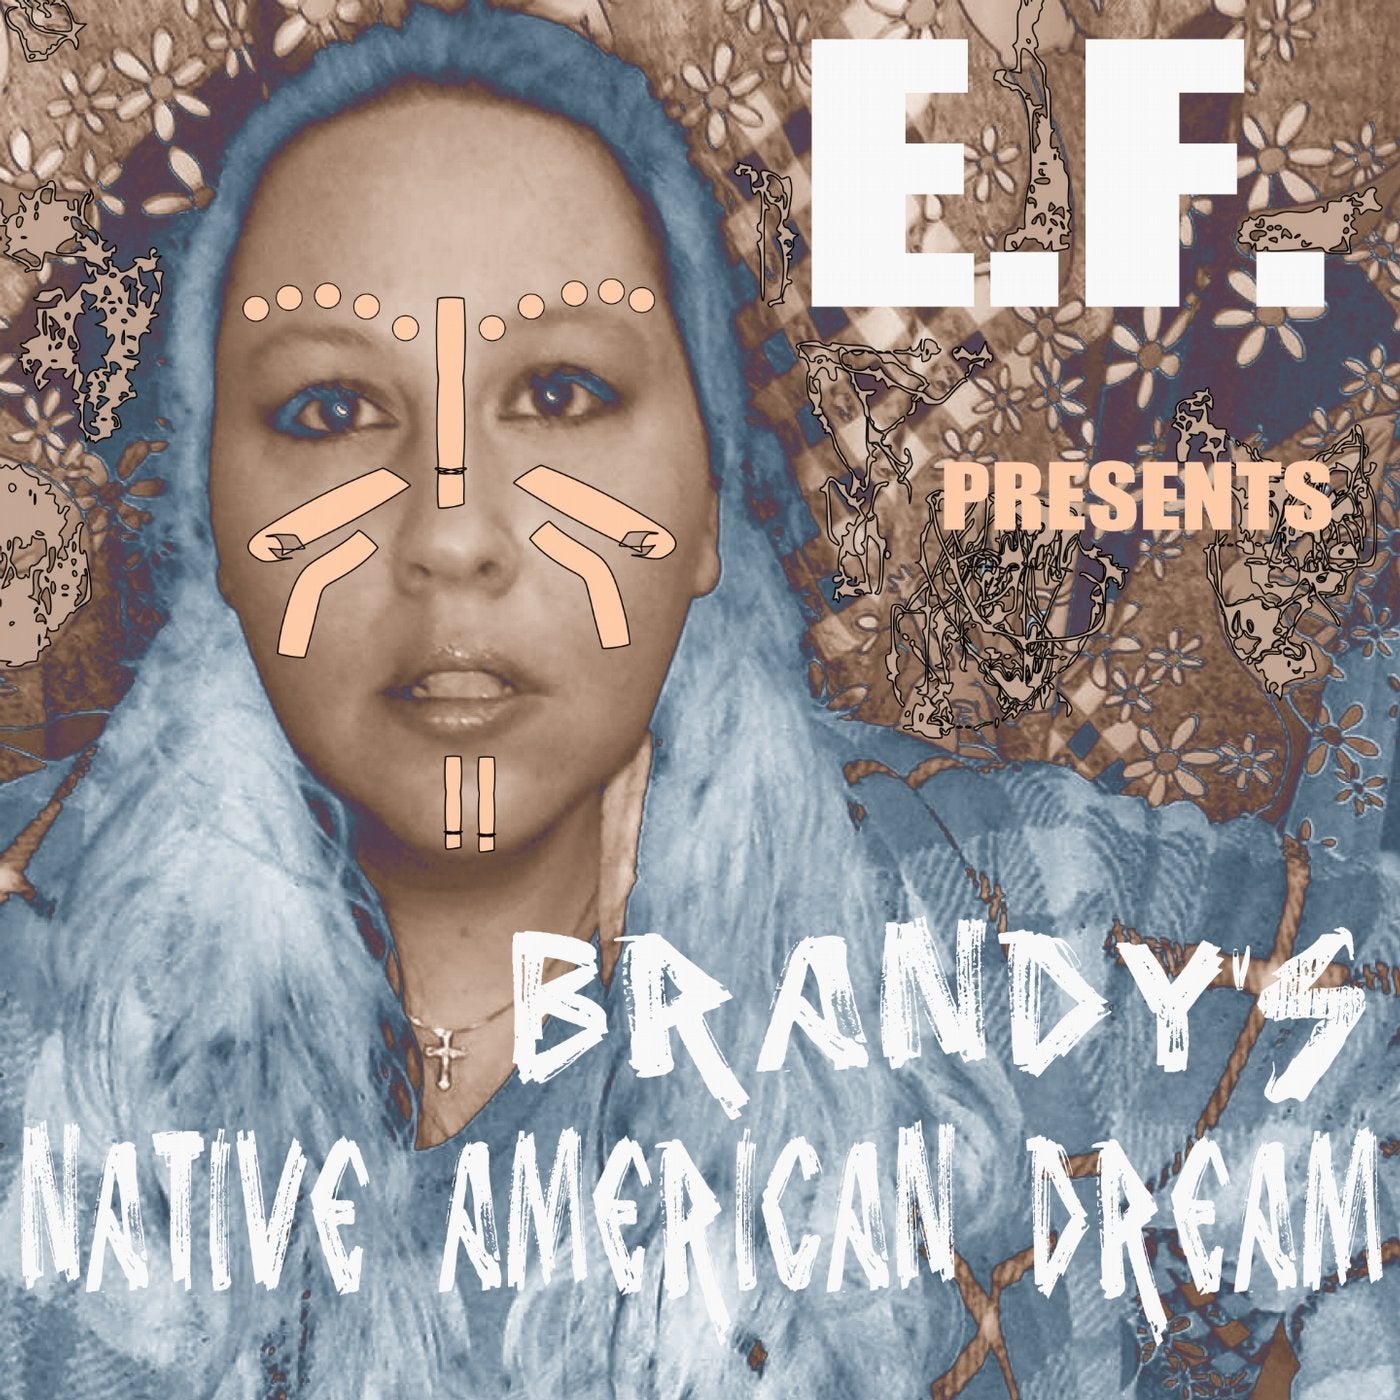 Brandy's Native American Dream